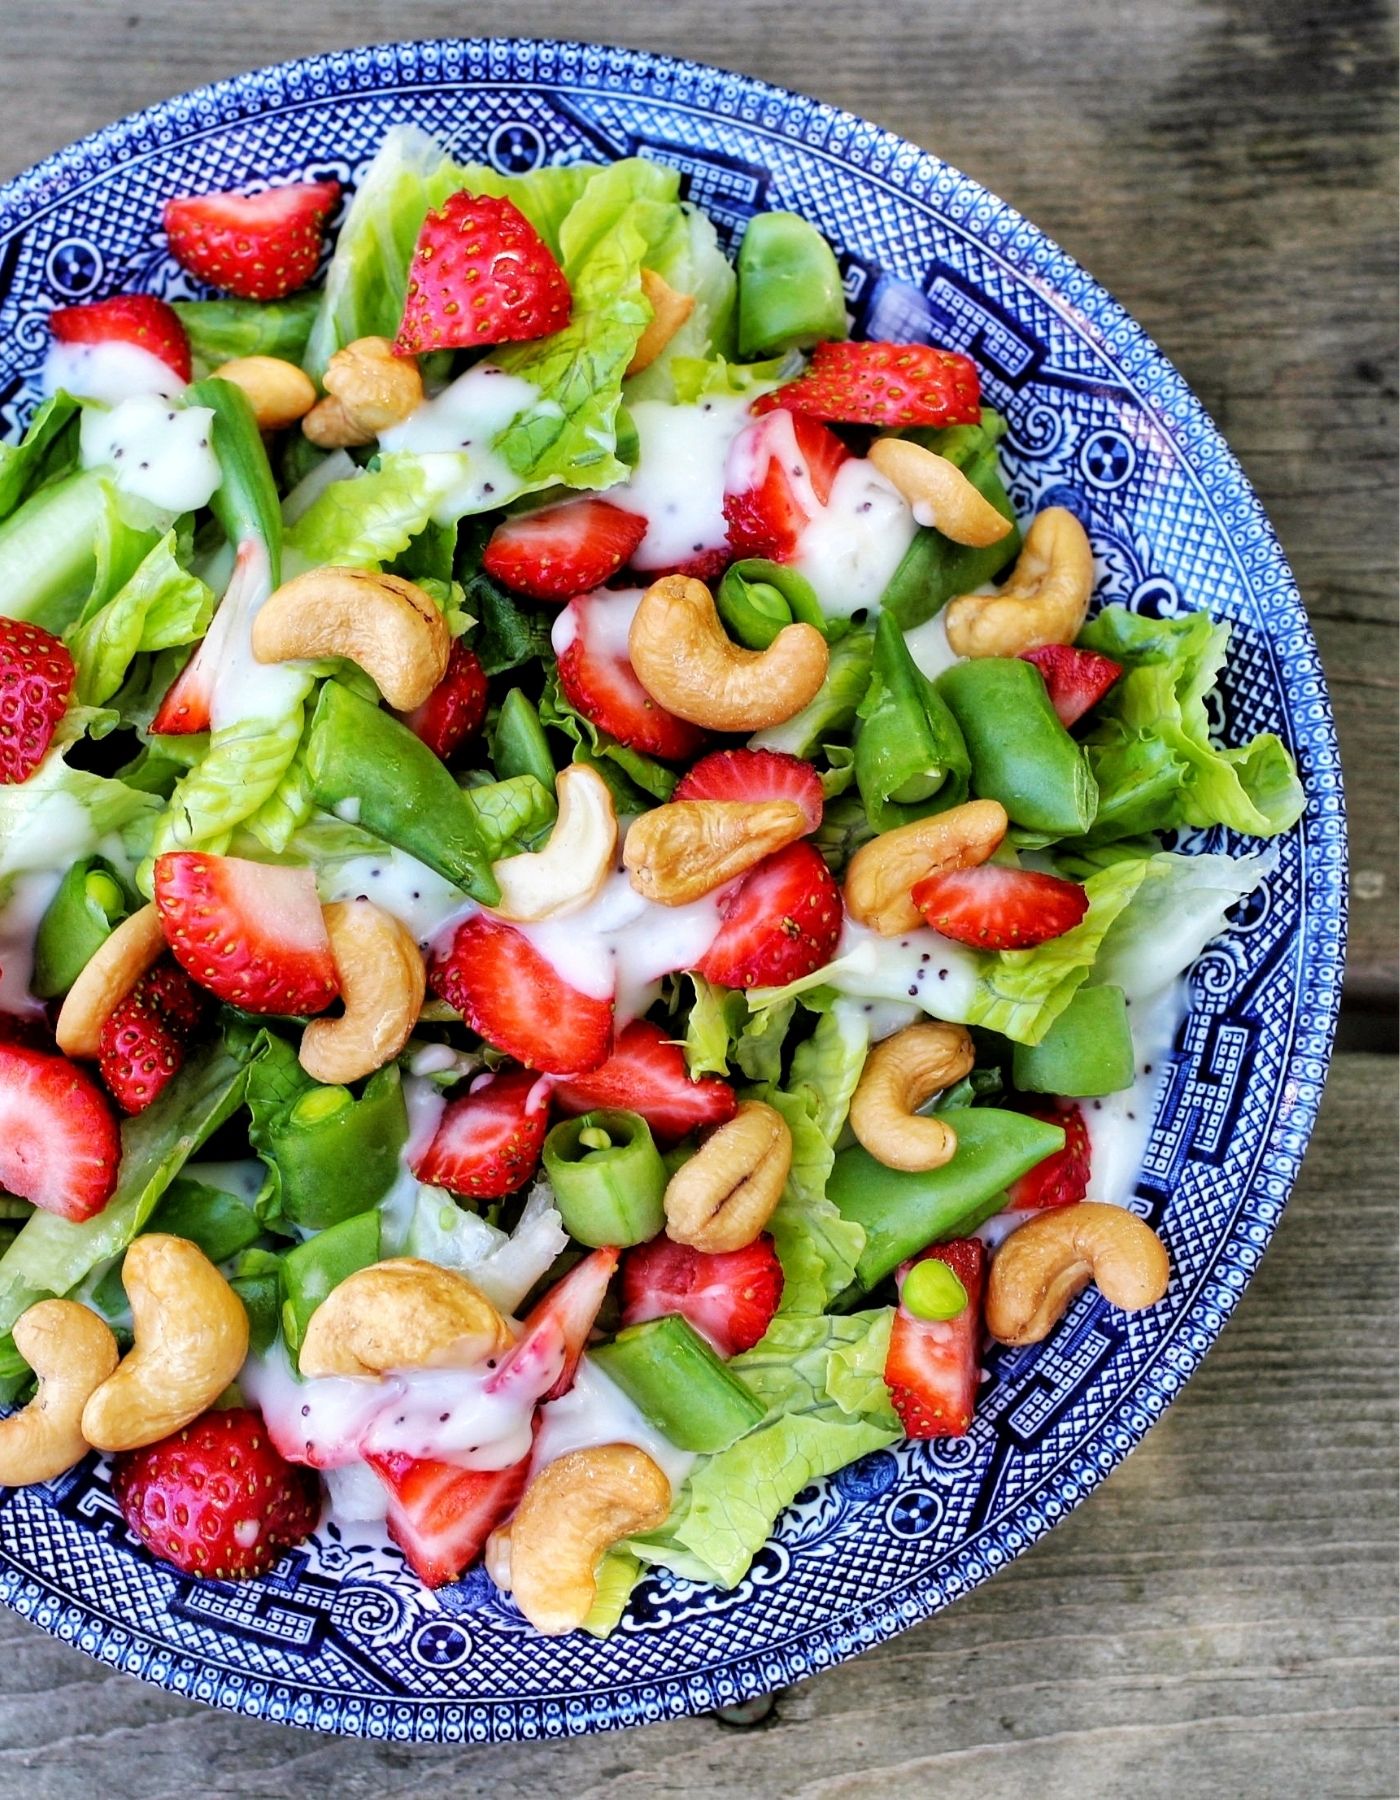 Cashew-Erdbeer-Salat mit veganem Joghurtdressing